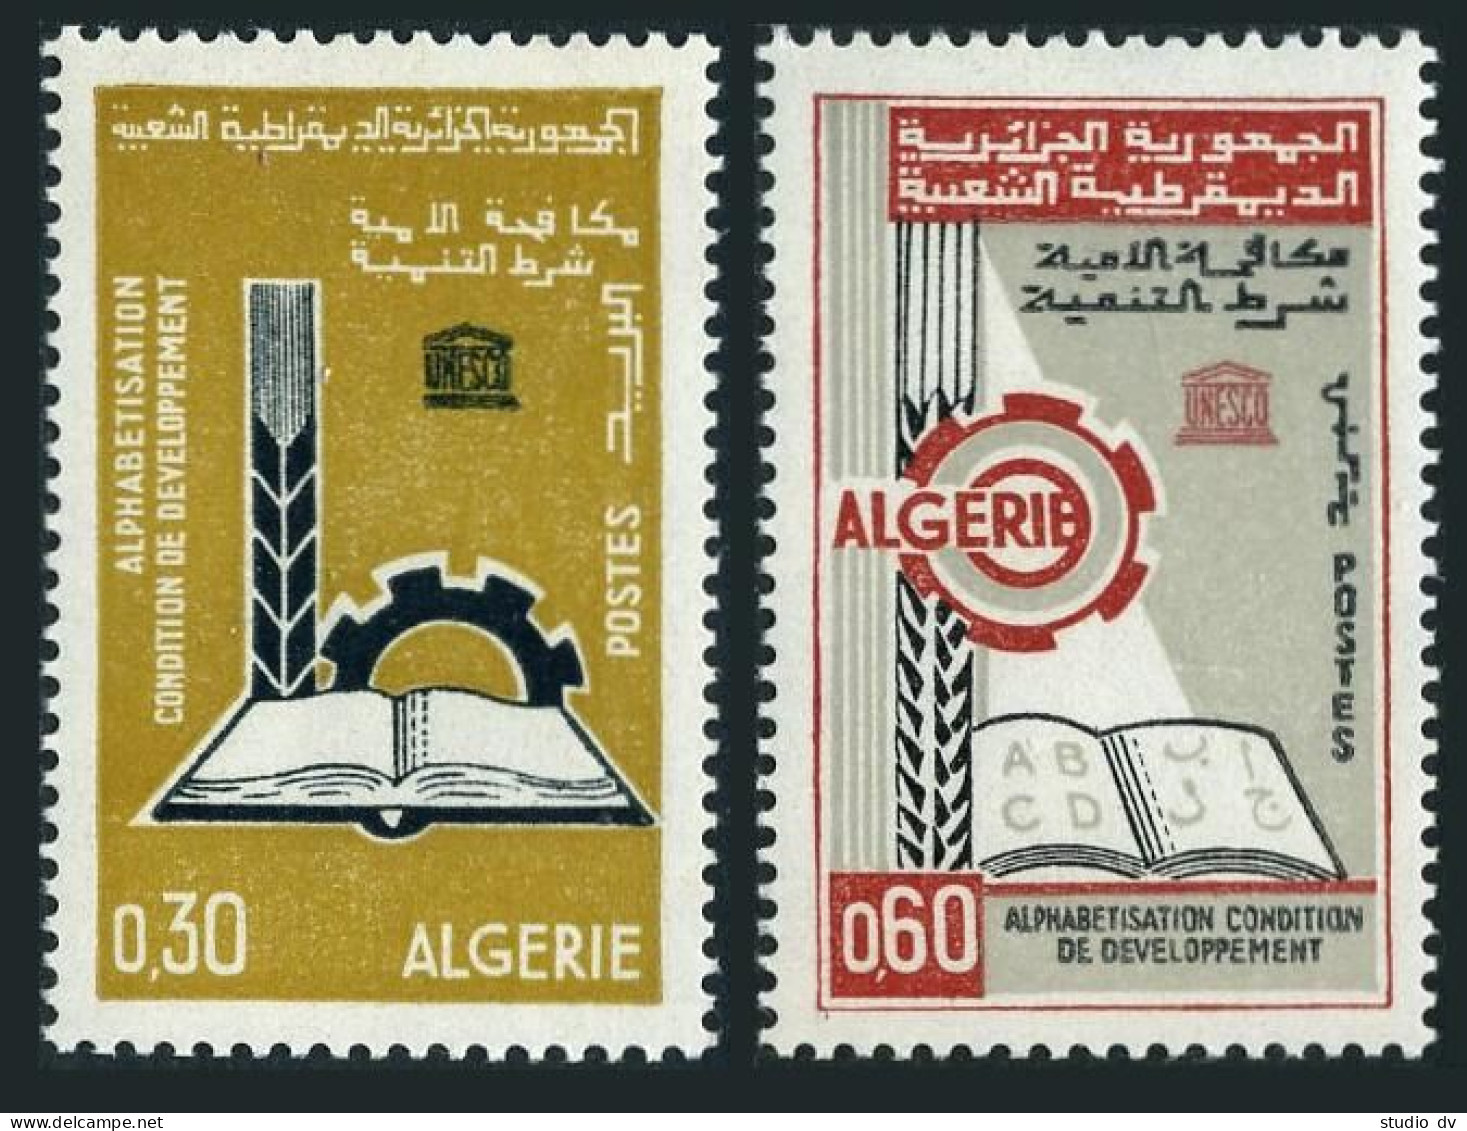 Algeria 352-353, MNH. Michel 452-453. Literacy As Basic For Development, 1966. - Algerien (1962-...)